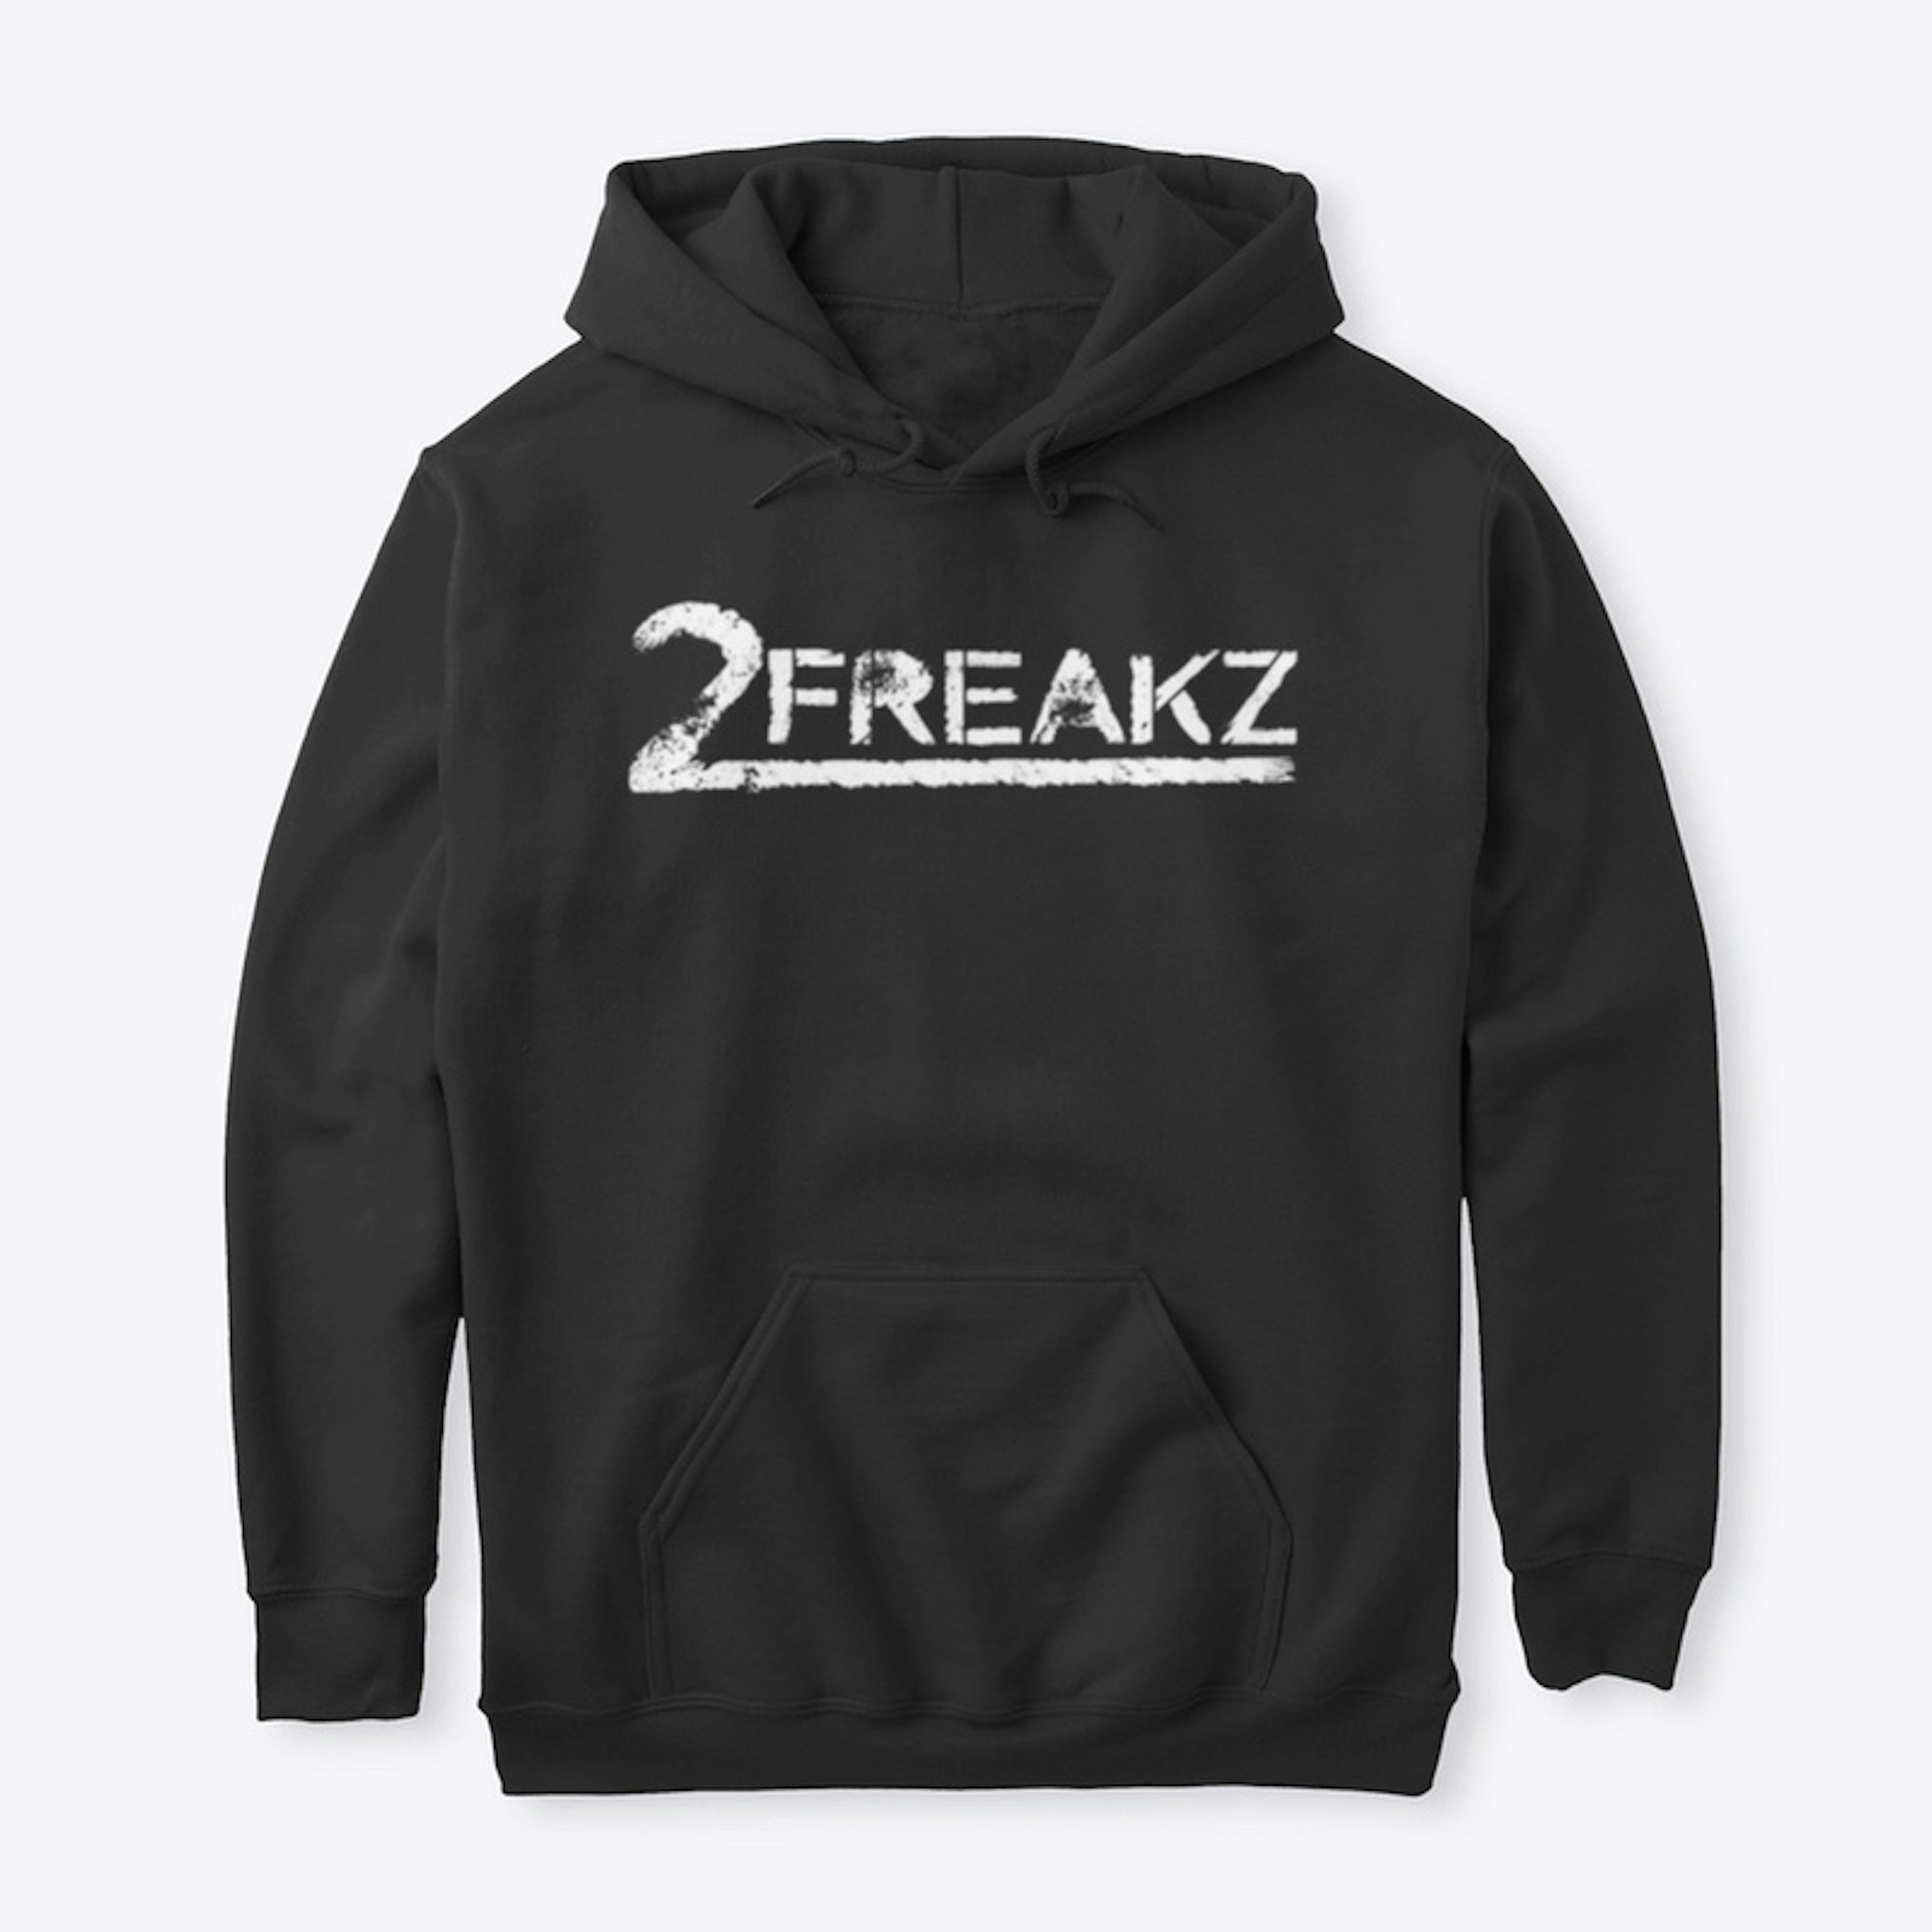 2Freakz Logo Black Shirt